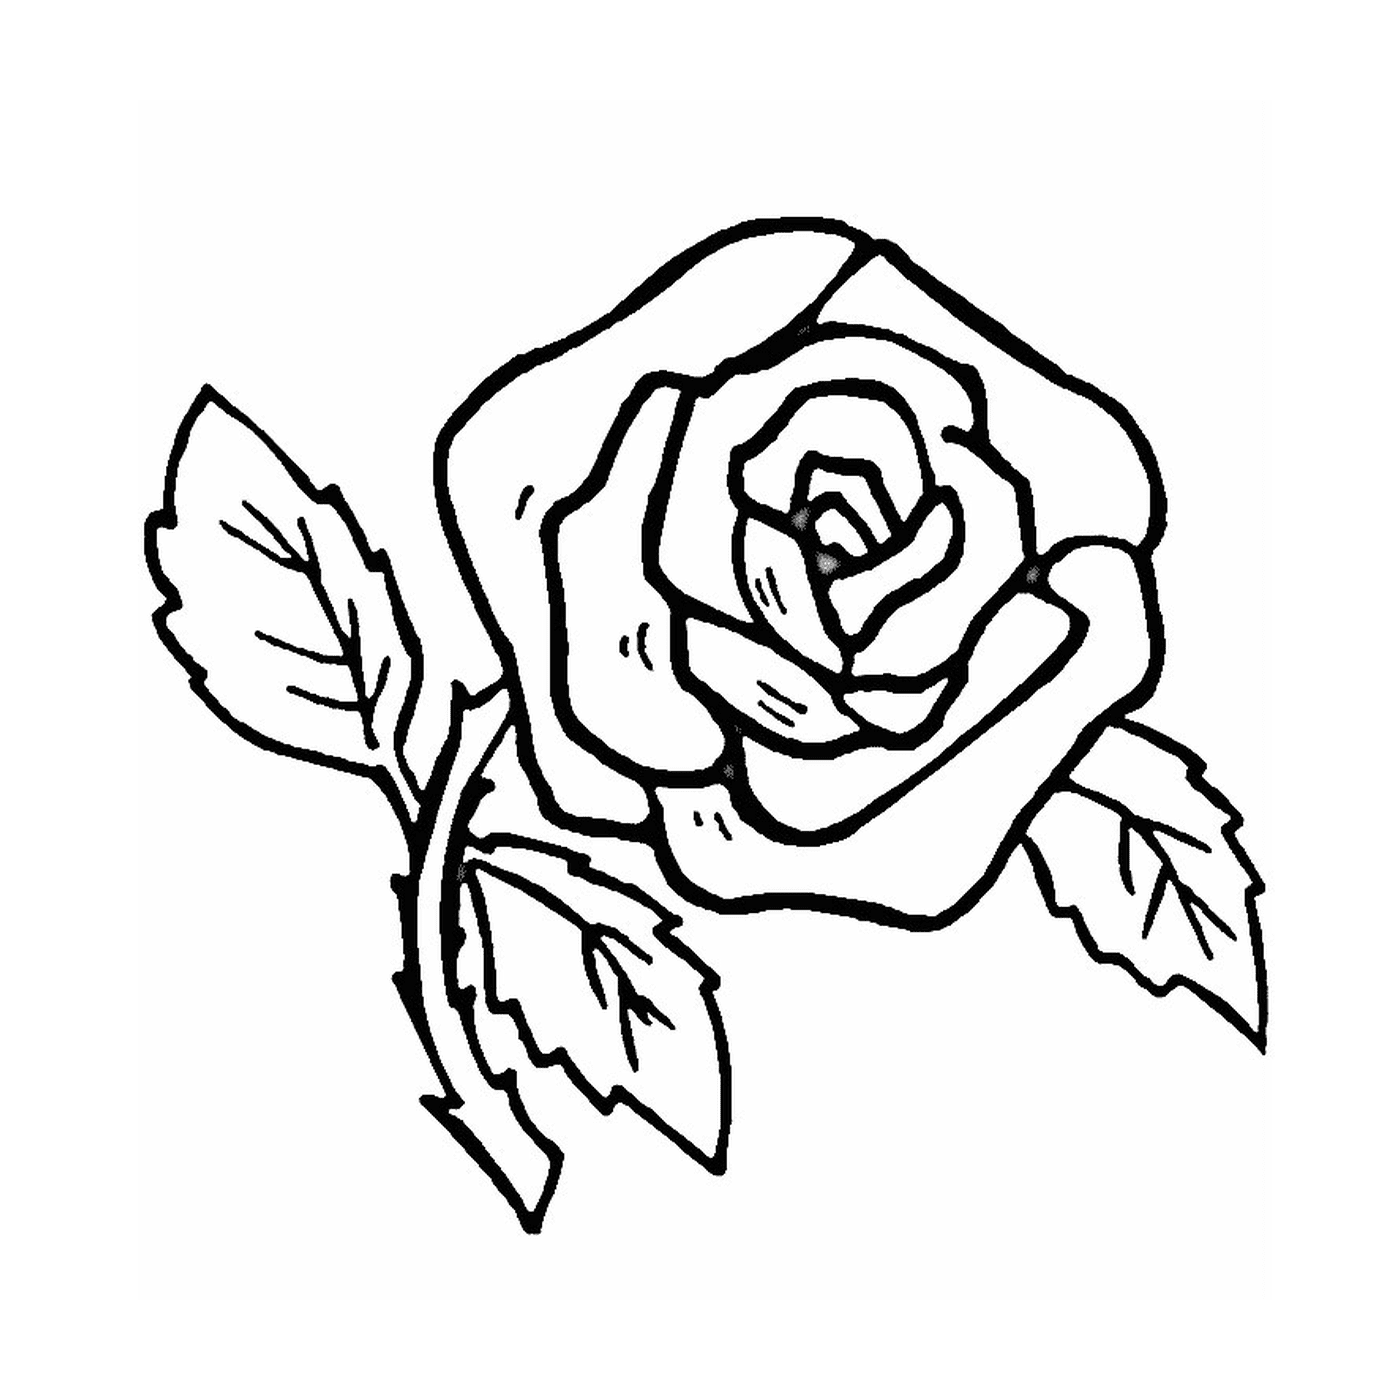   Une rose simple et facile 